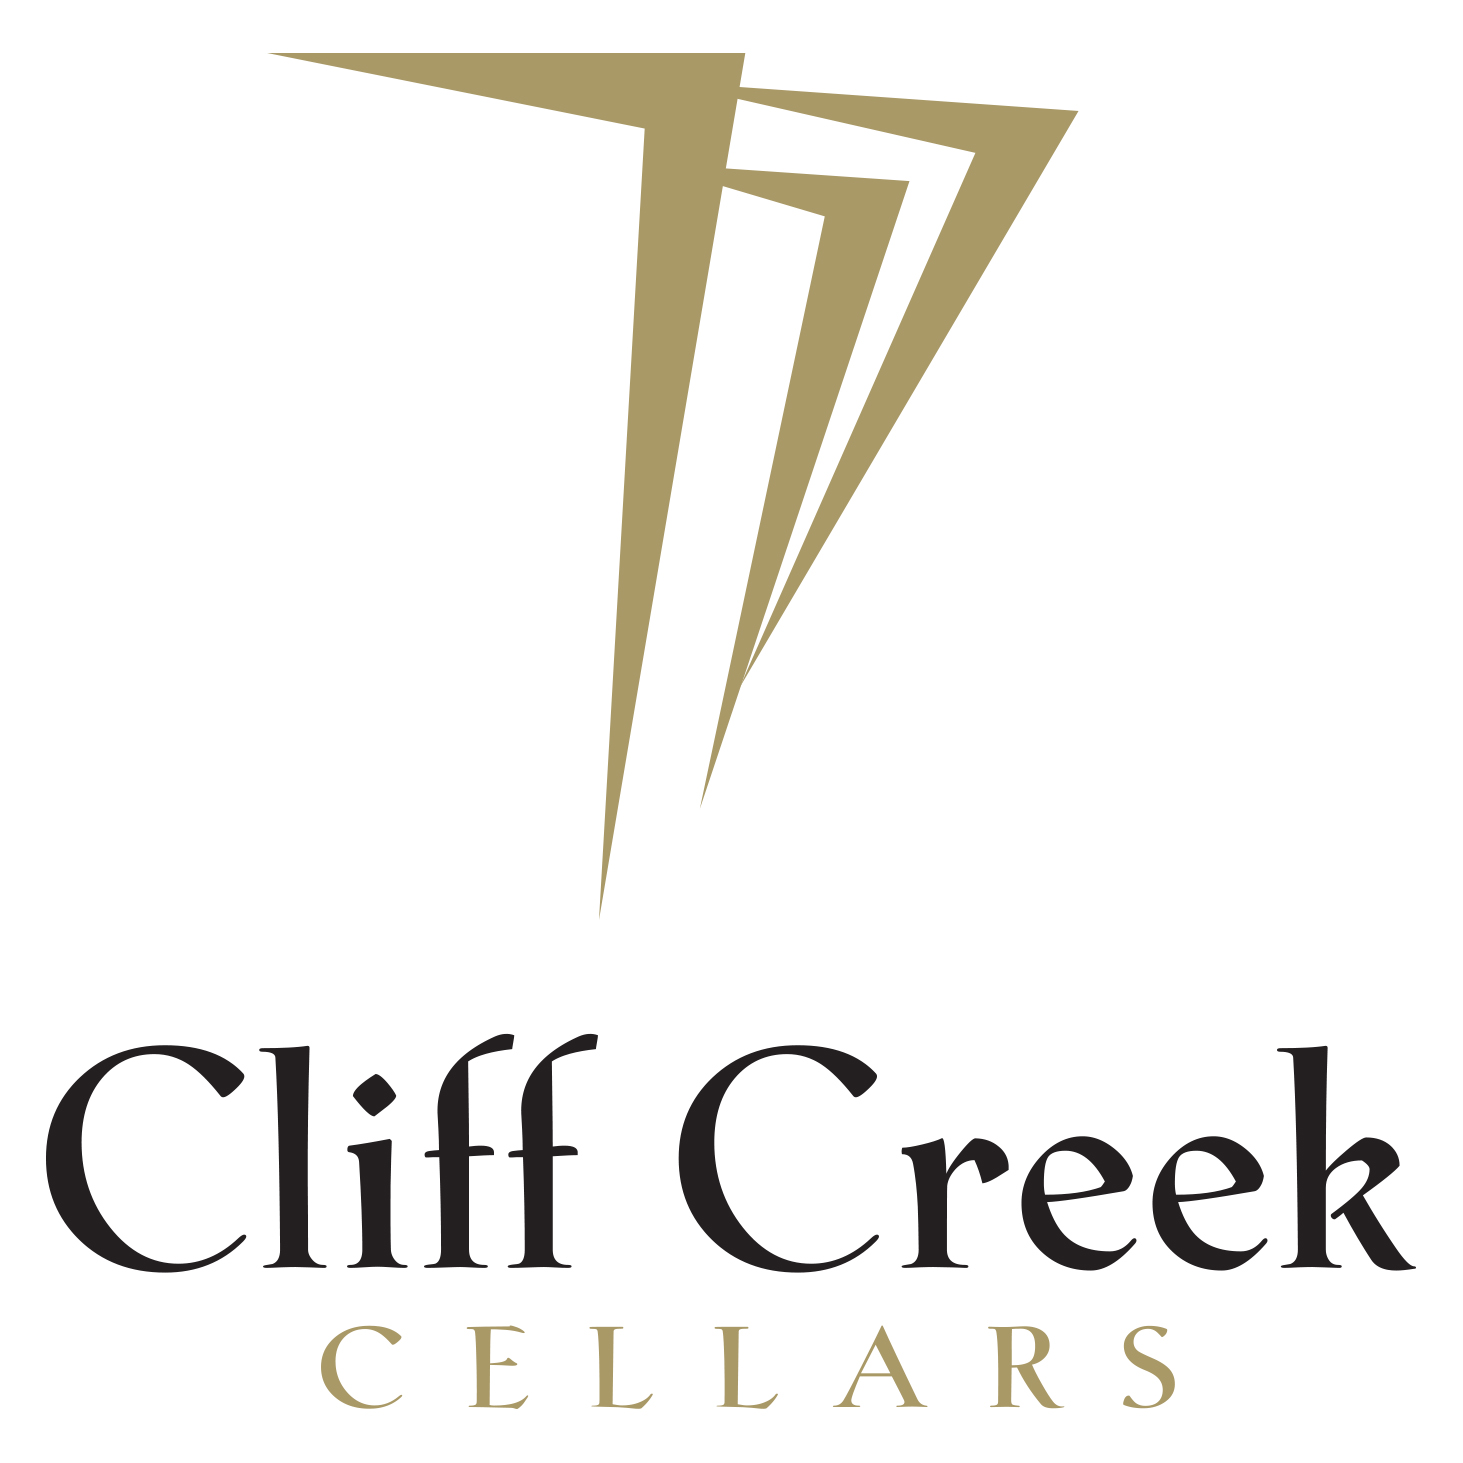 Cliff Creek Cellars in Newberg